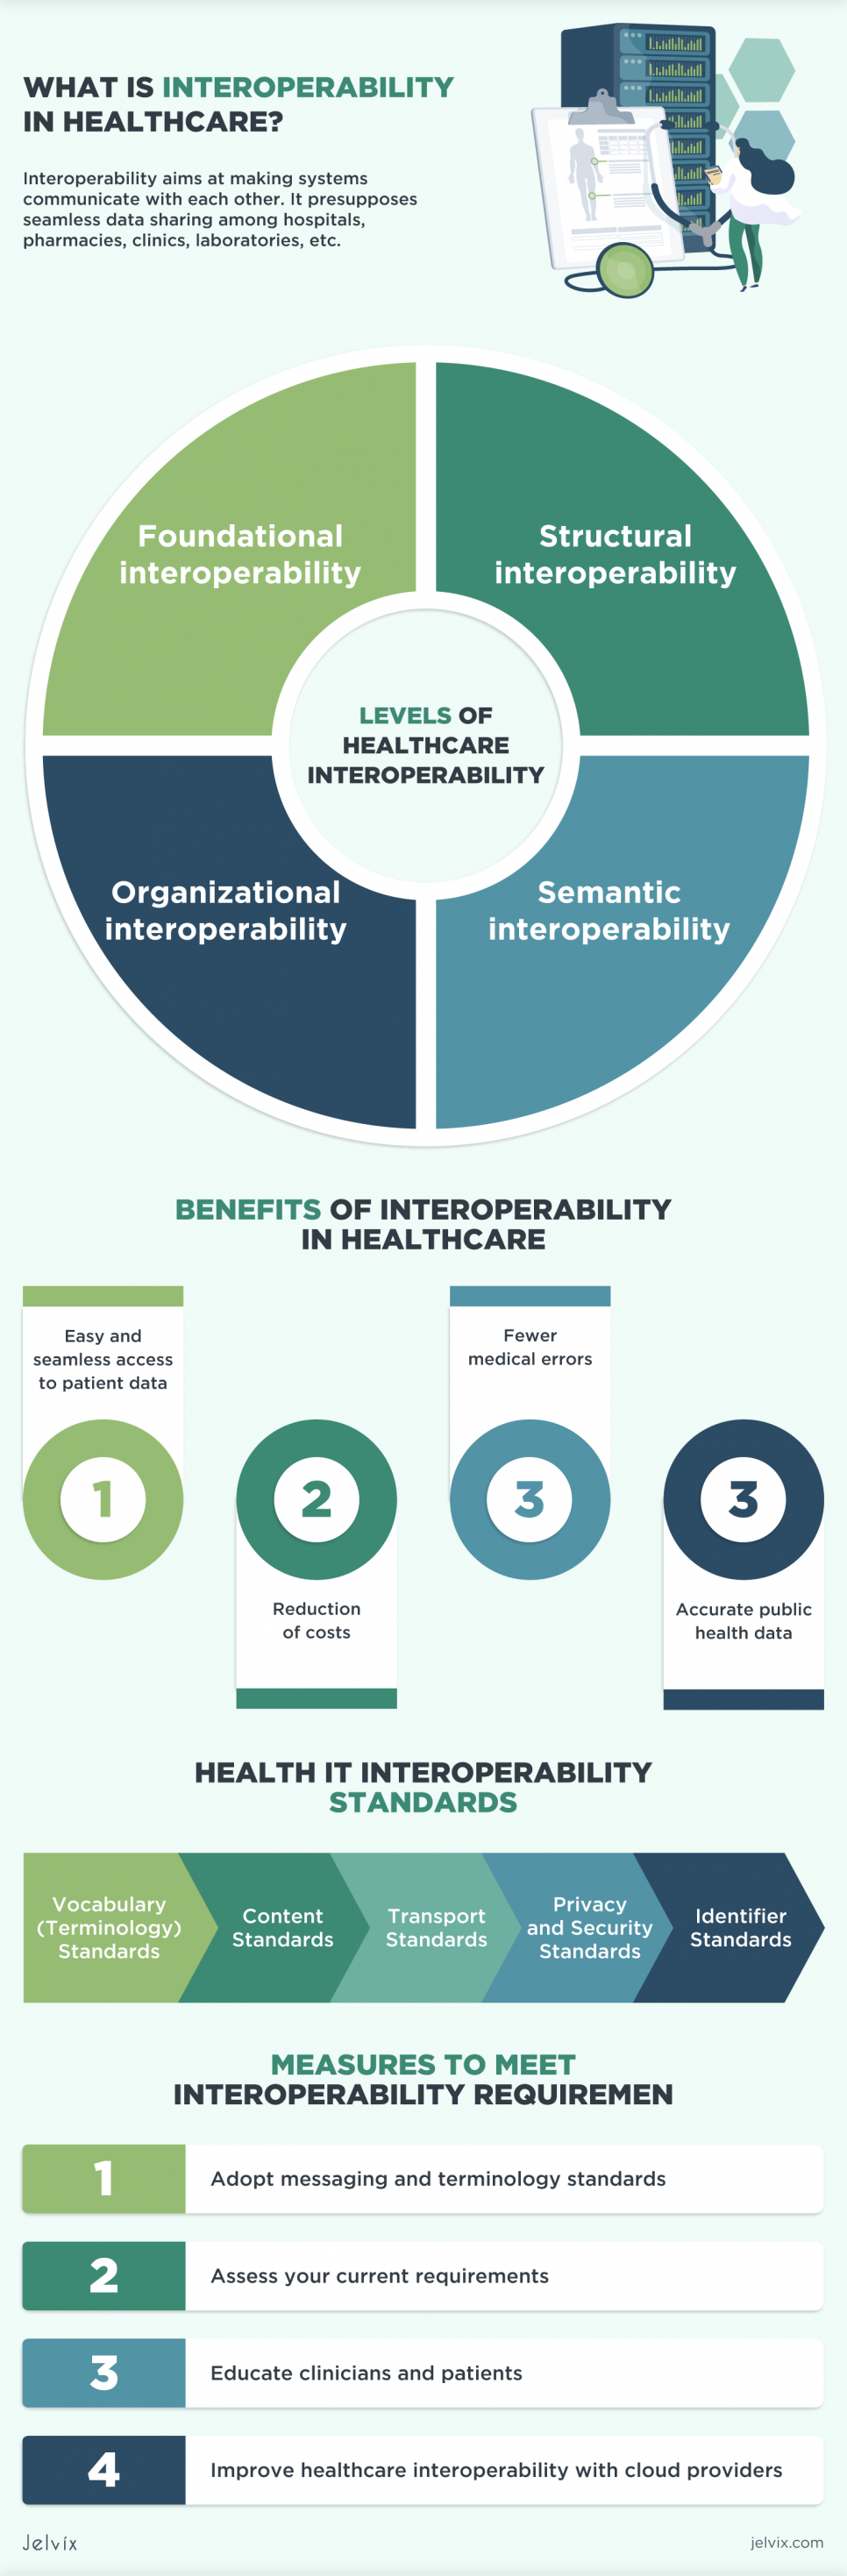 interoperability in healthcare